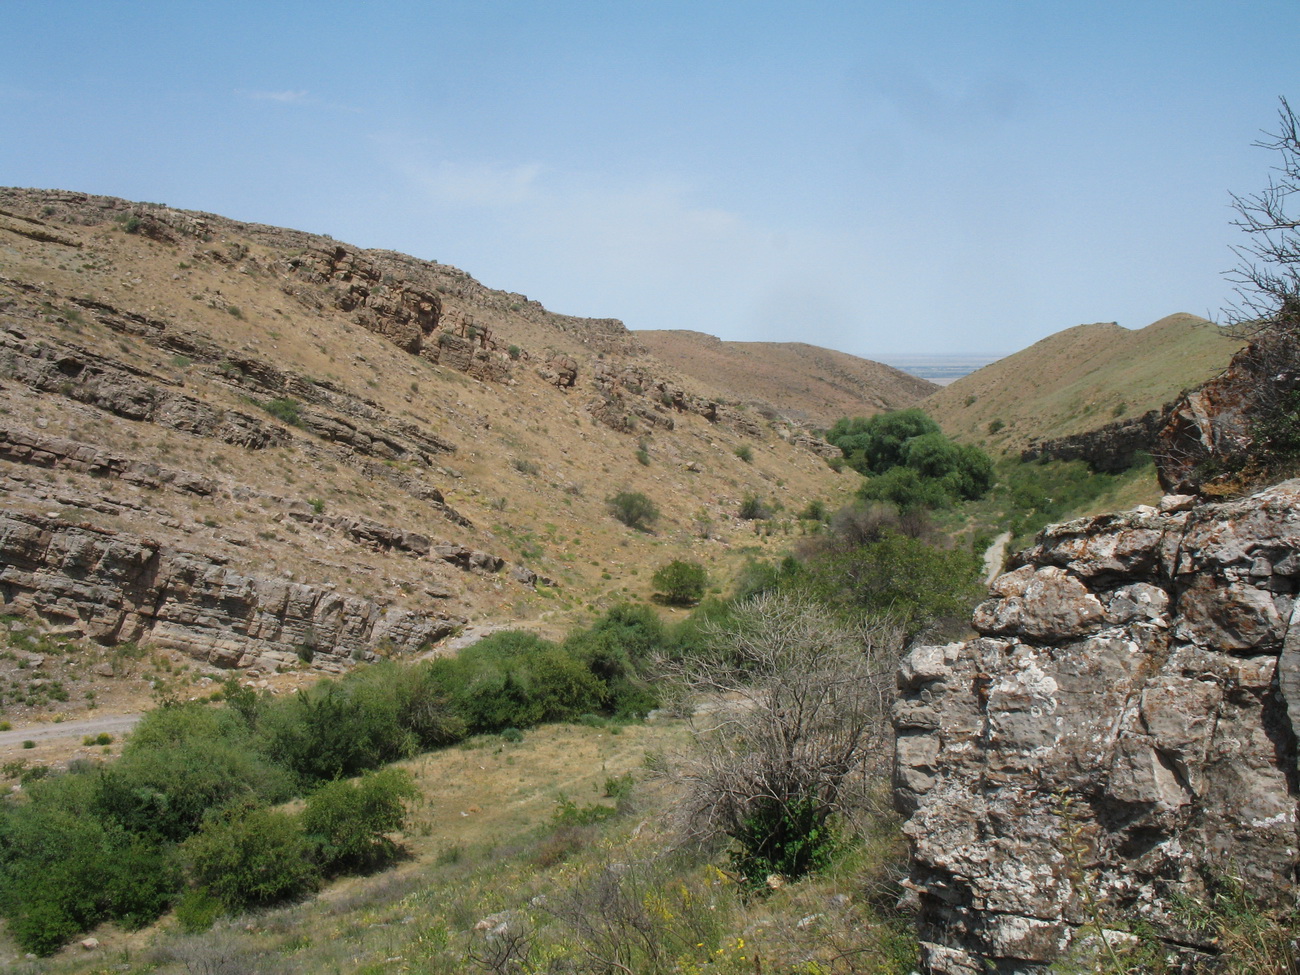 Ущелье Кара-Арча, изображение ландшафта.